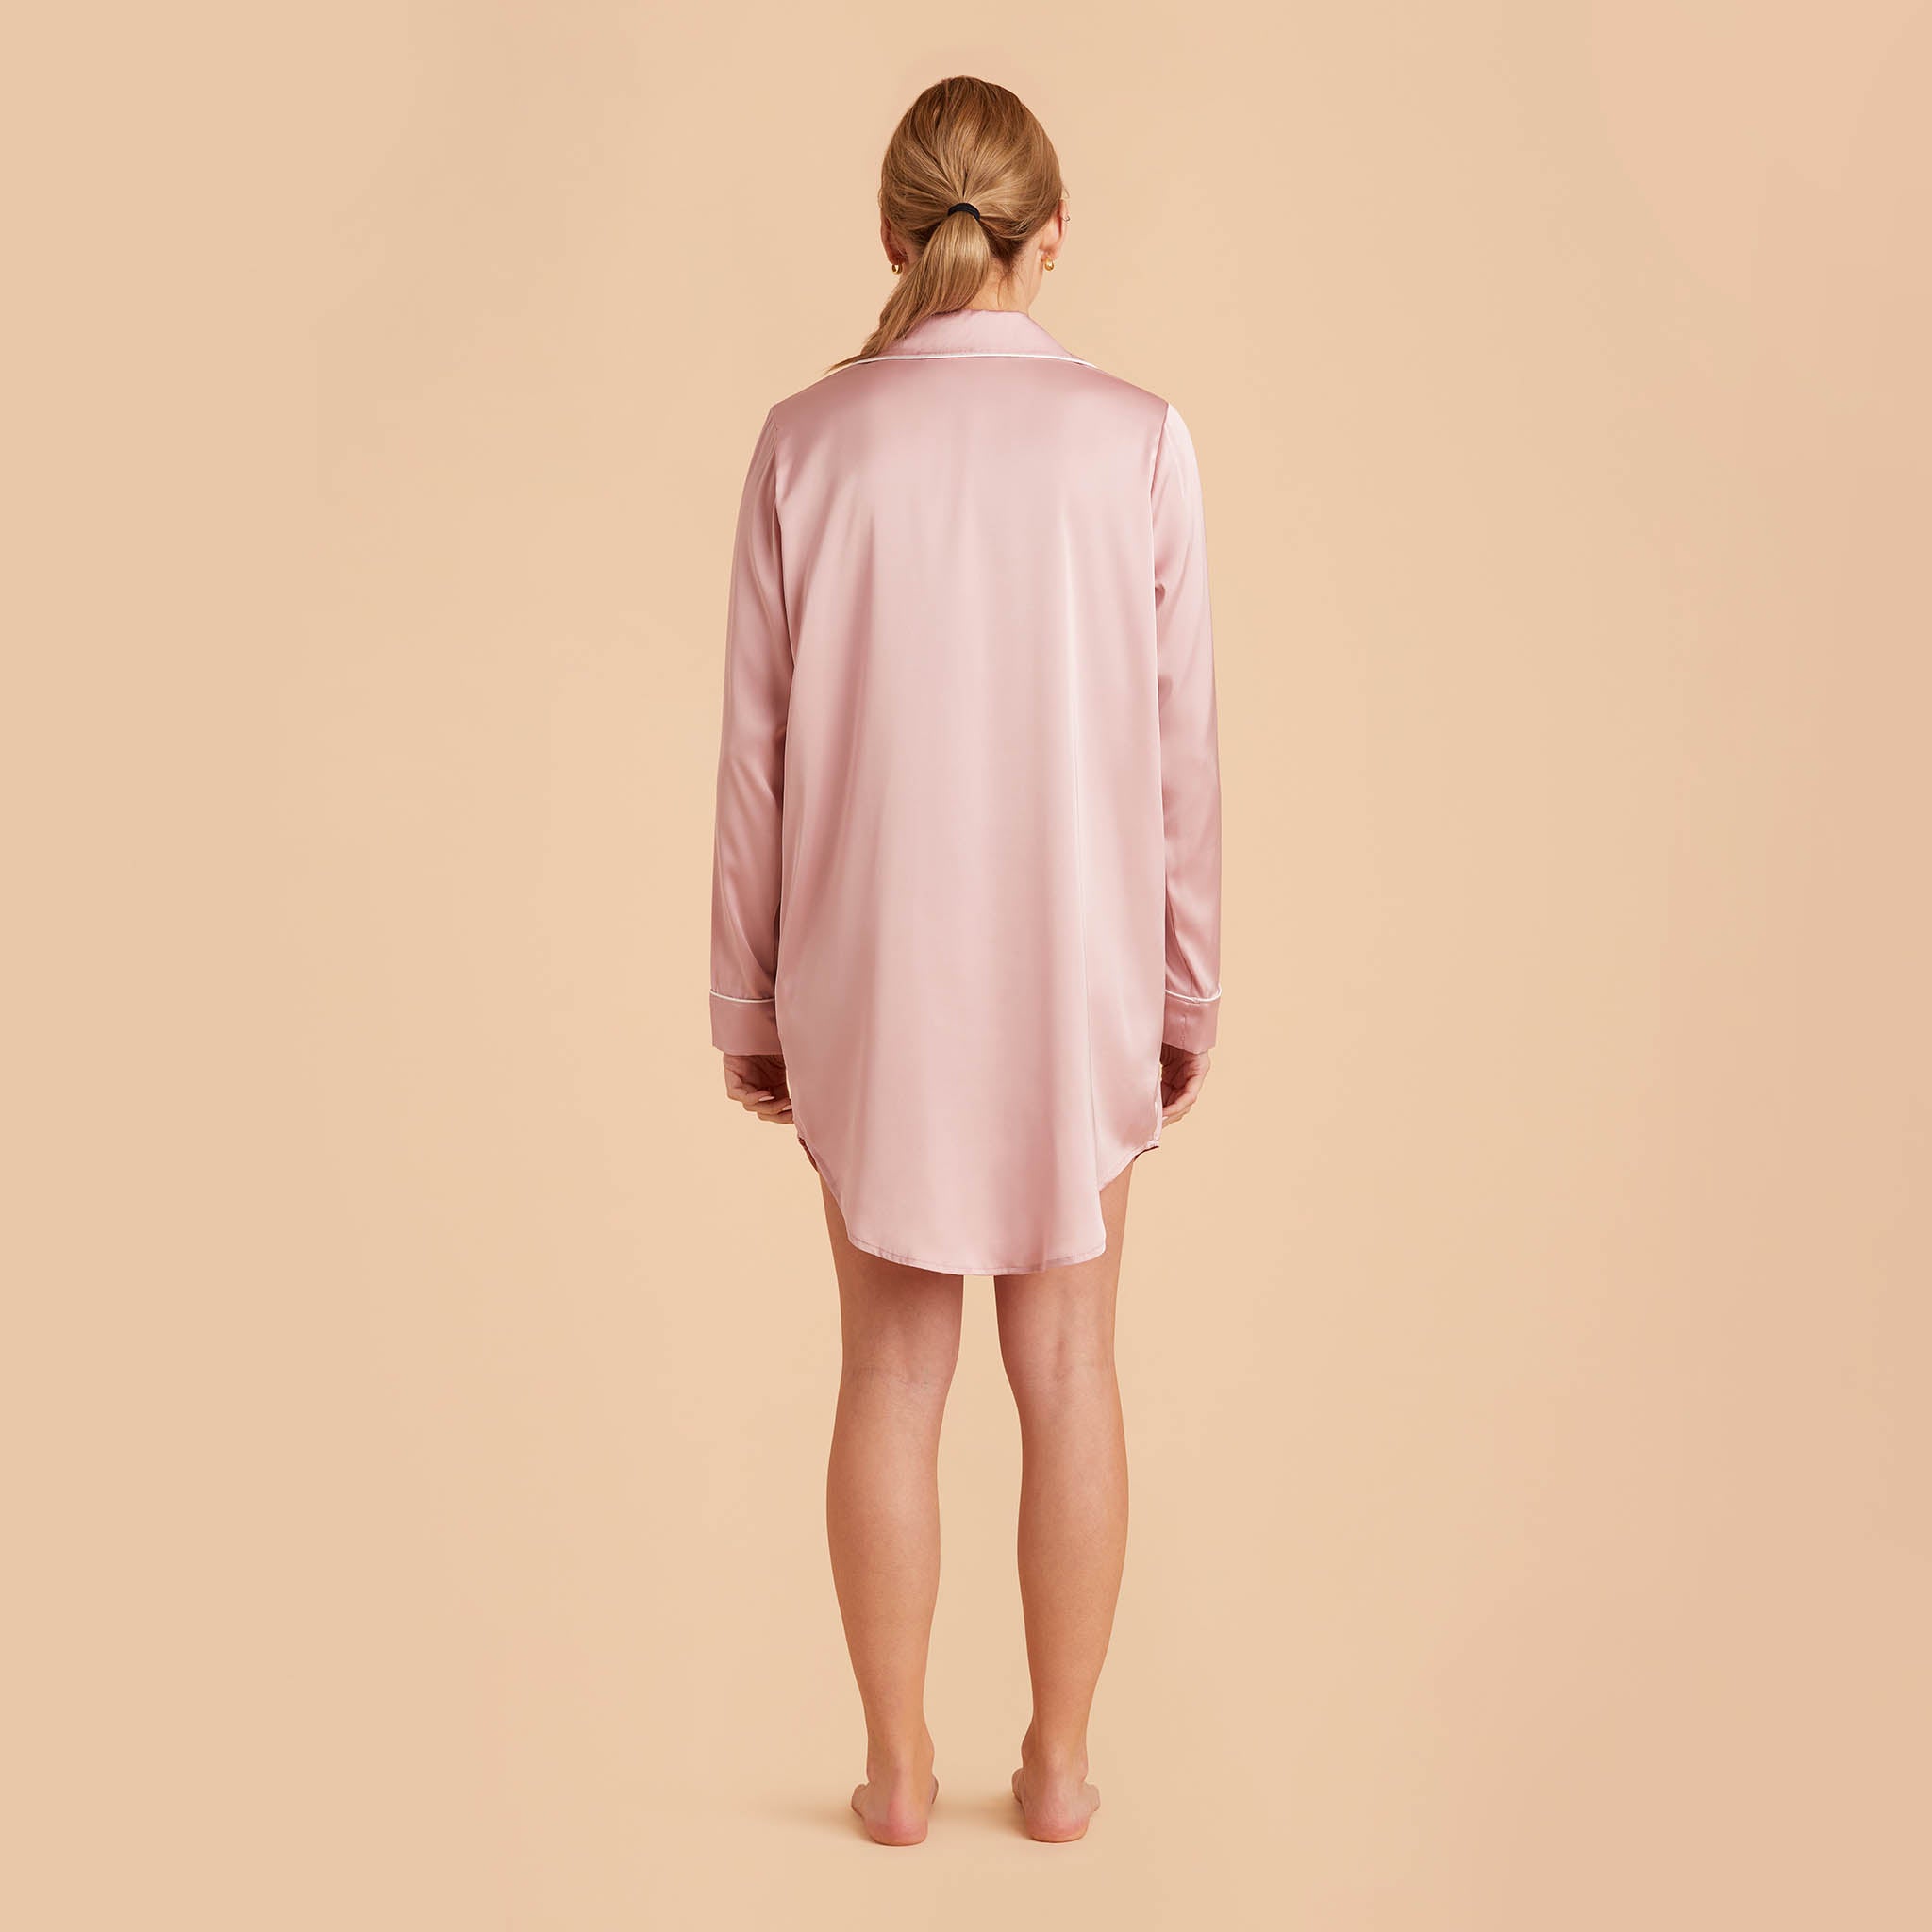 Satin Sleepshirt in dusty pink by Birdy Grey, back view